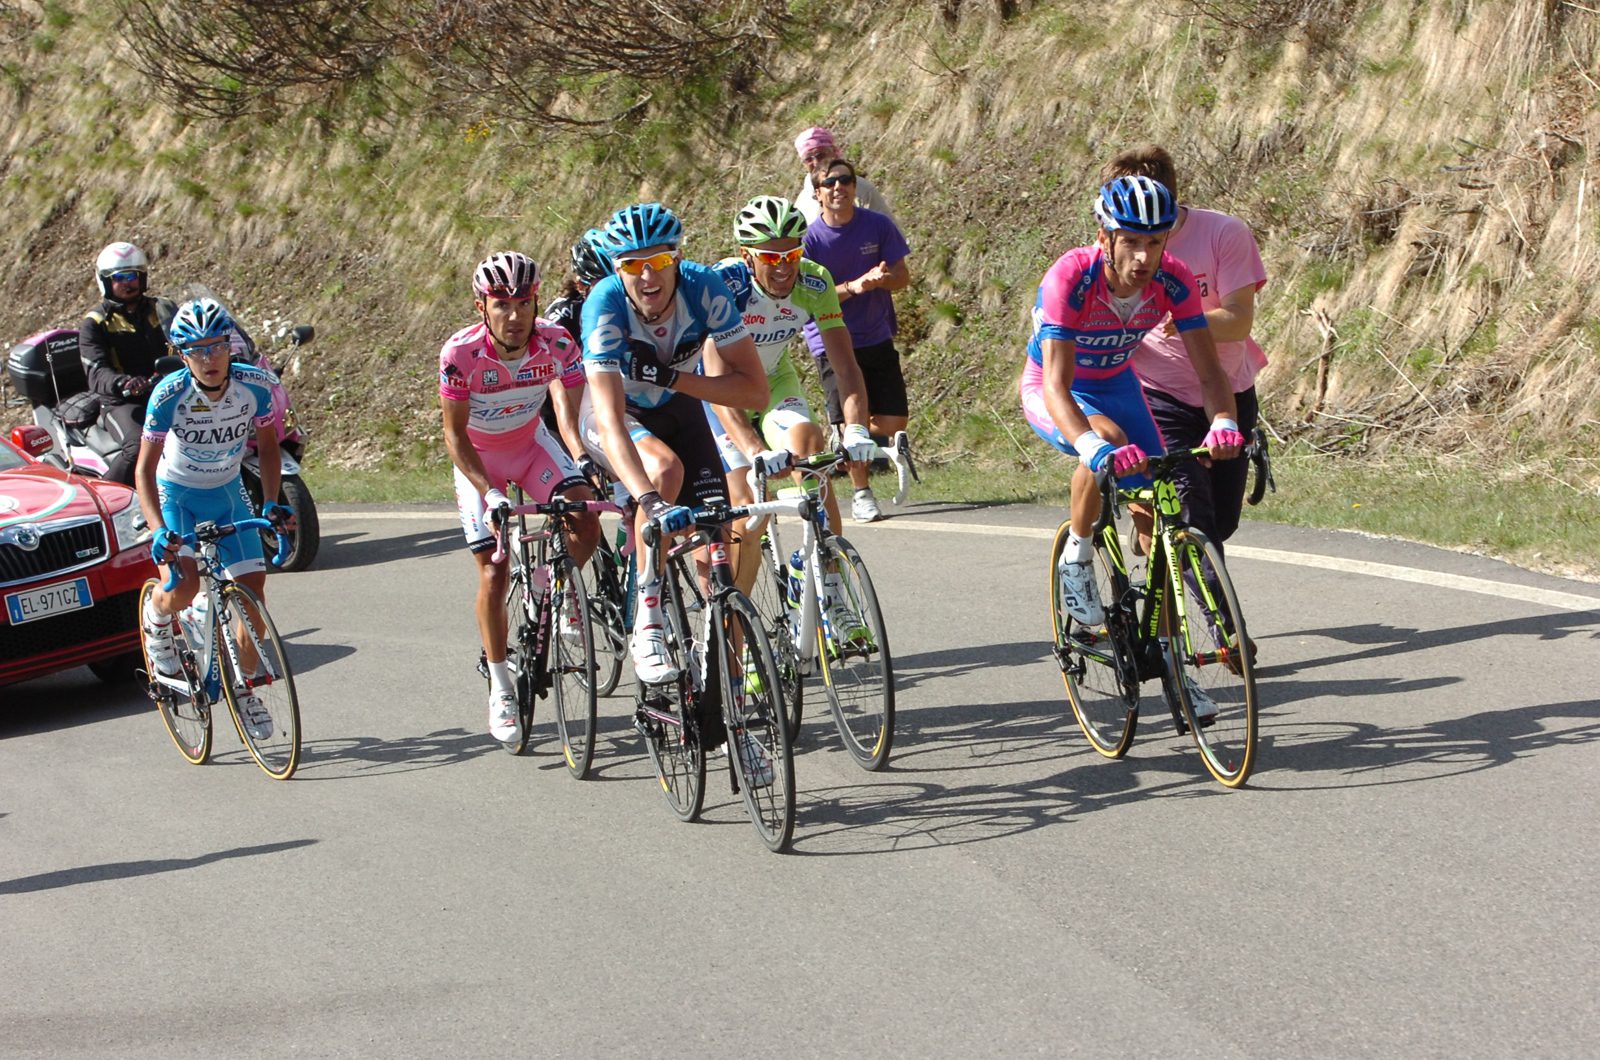 Ryder Hesjedal Passo Giau 2012 Giro d'Italia